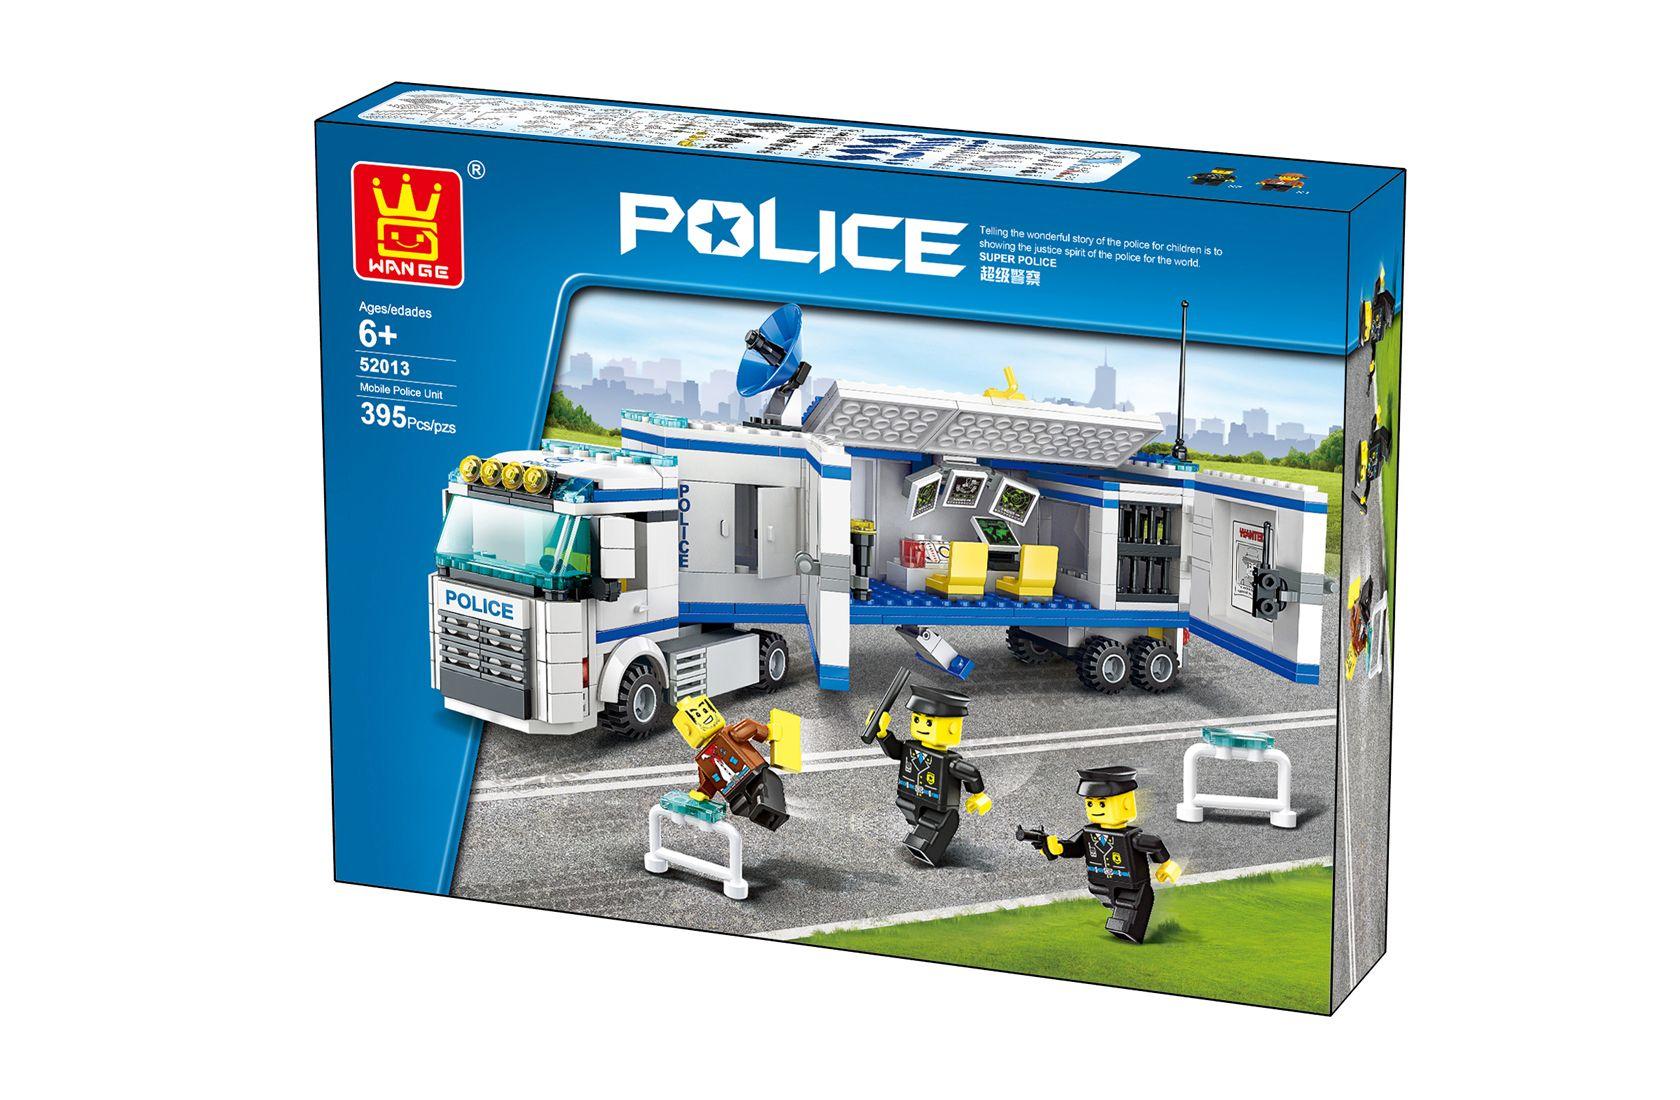 Police mobile command center